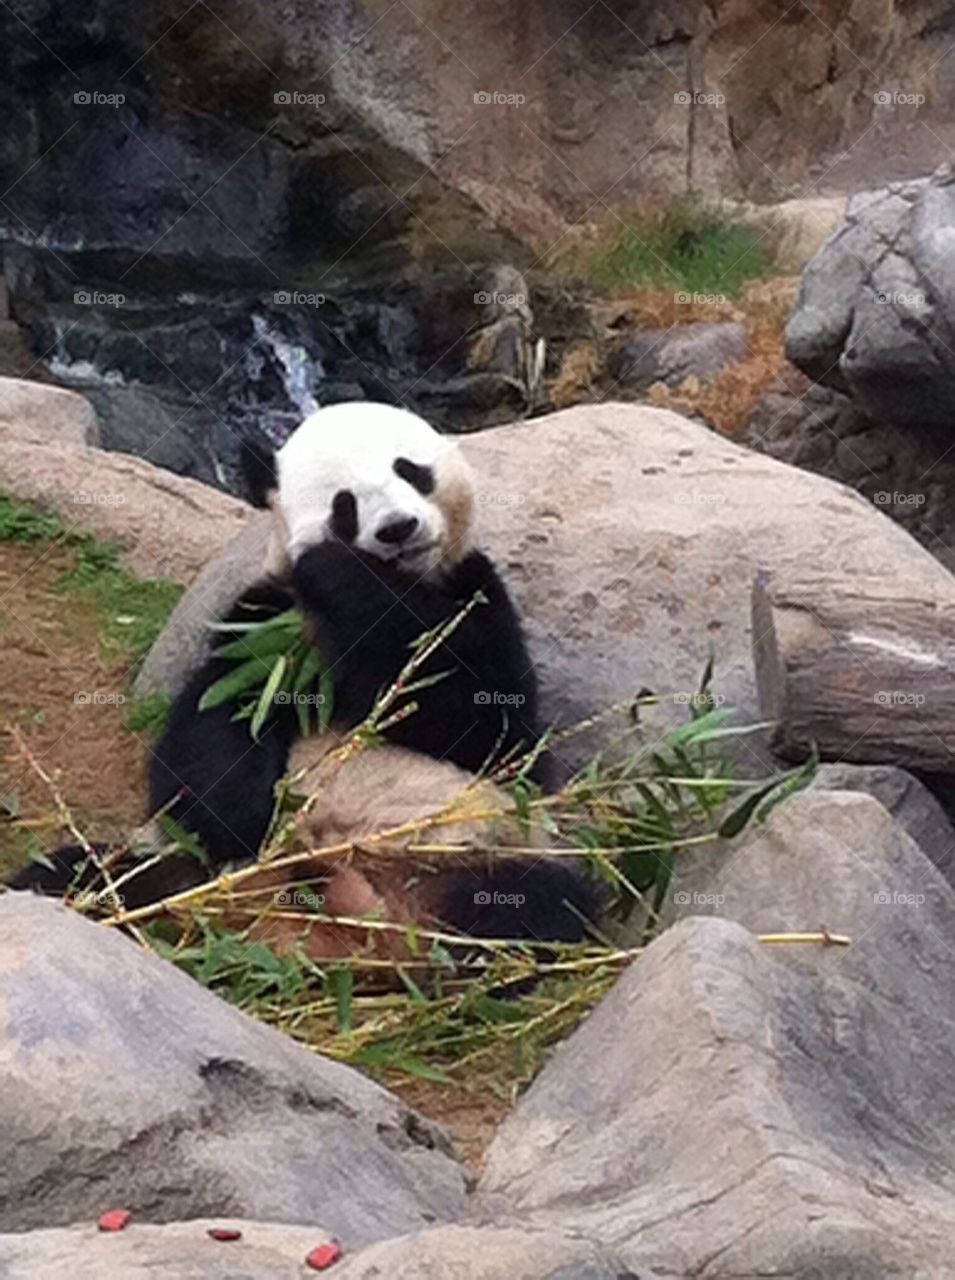 Panda snack time